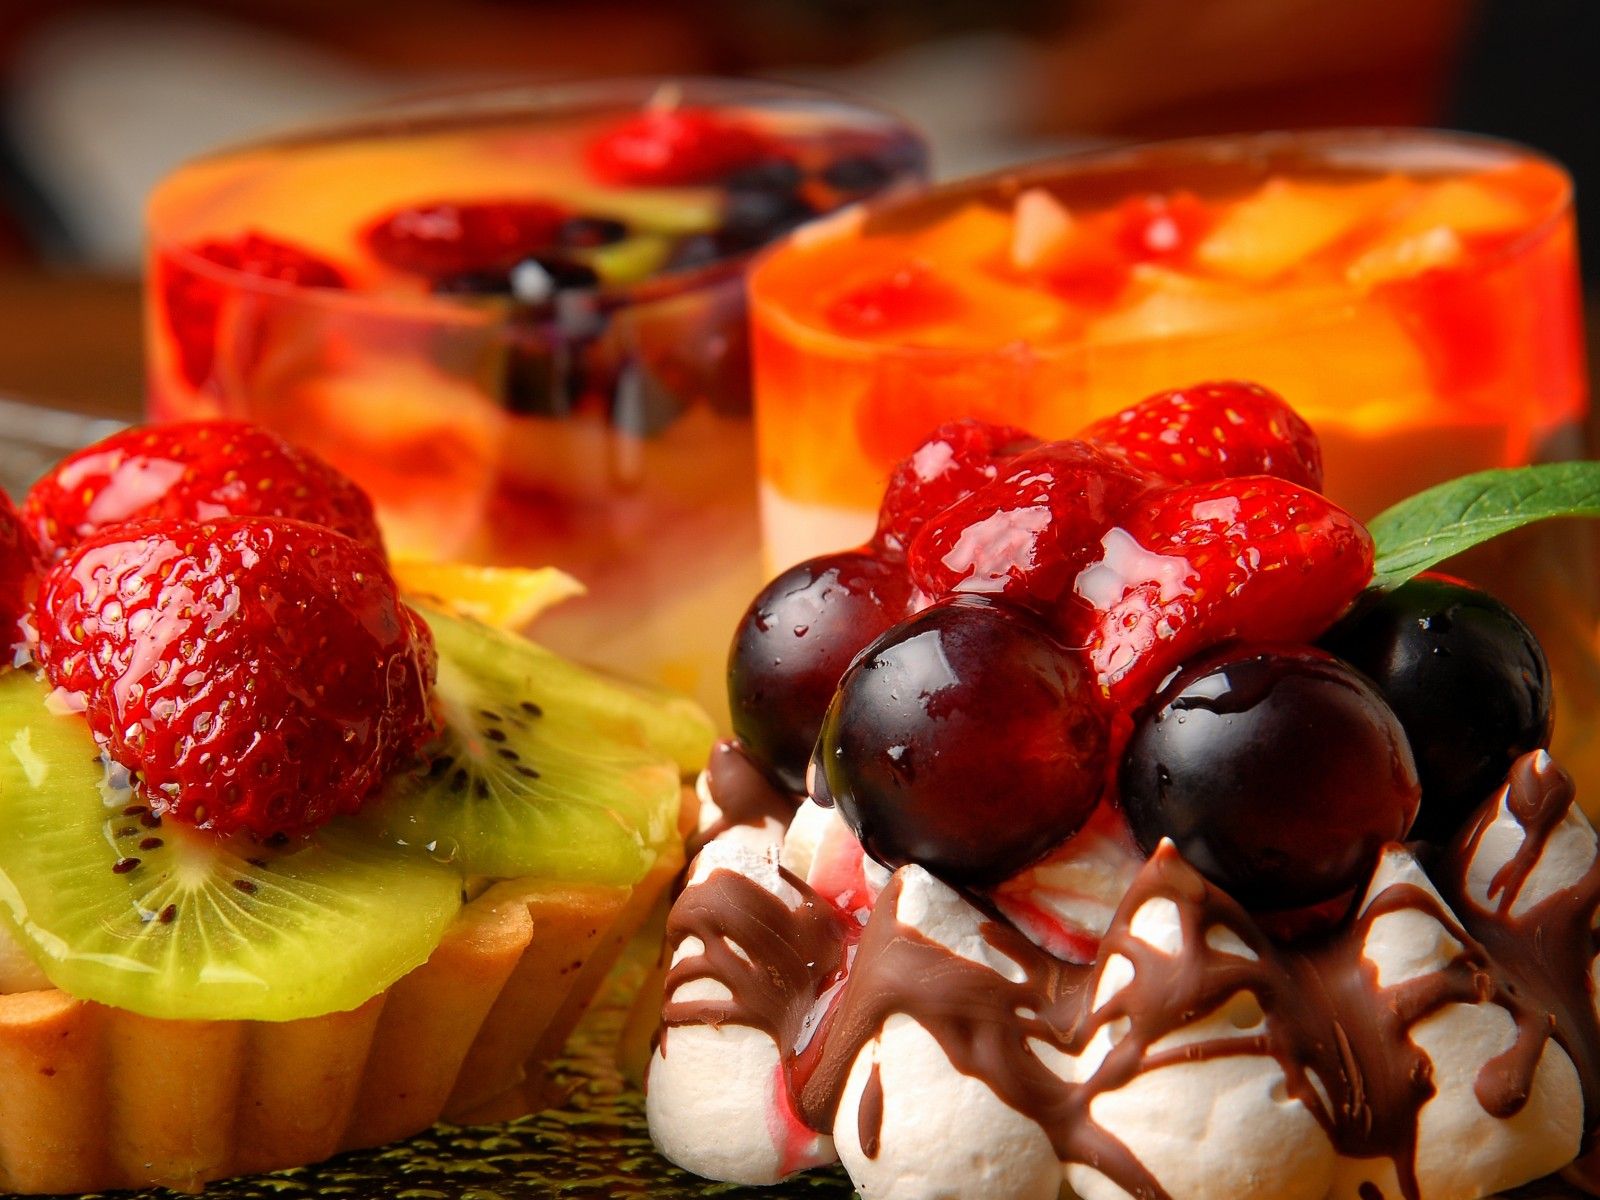 Wallpaper, cakes, jelly, fruit, tasty 5665x4249